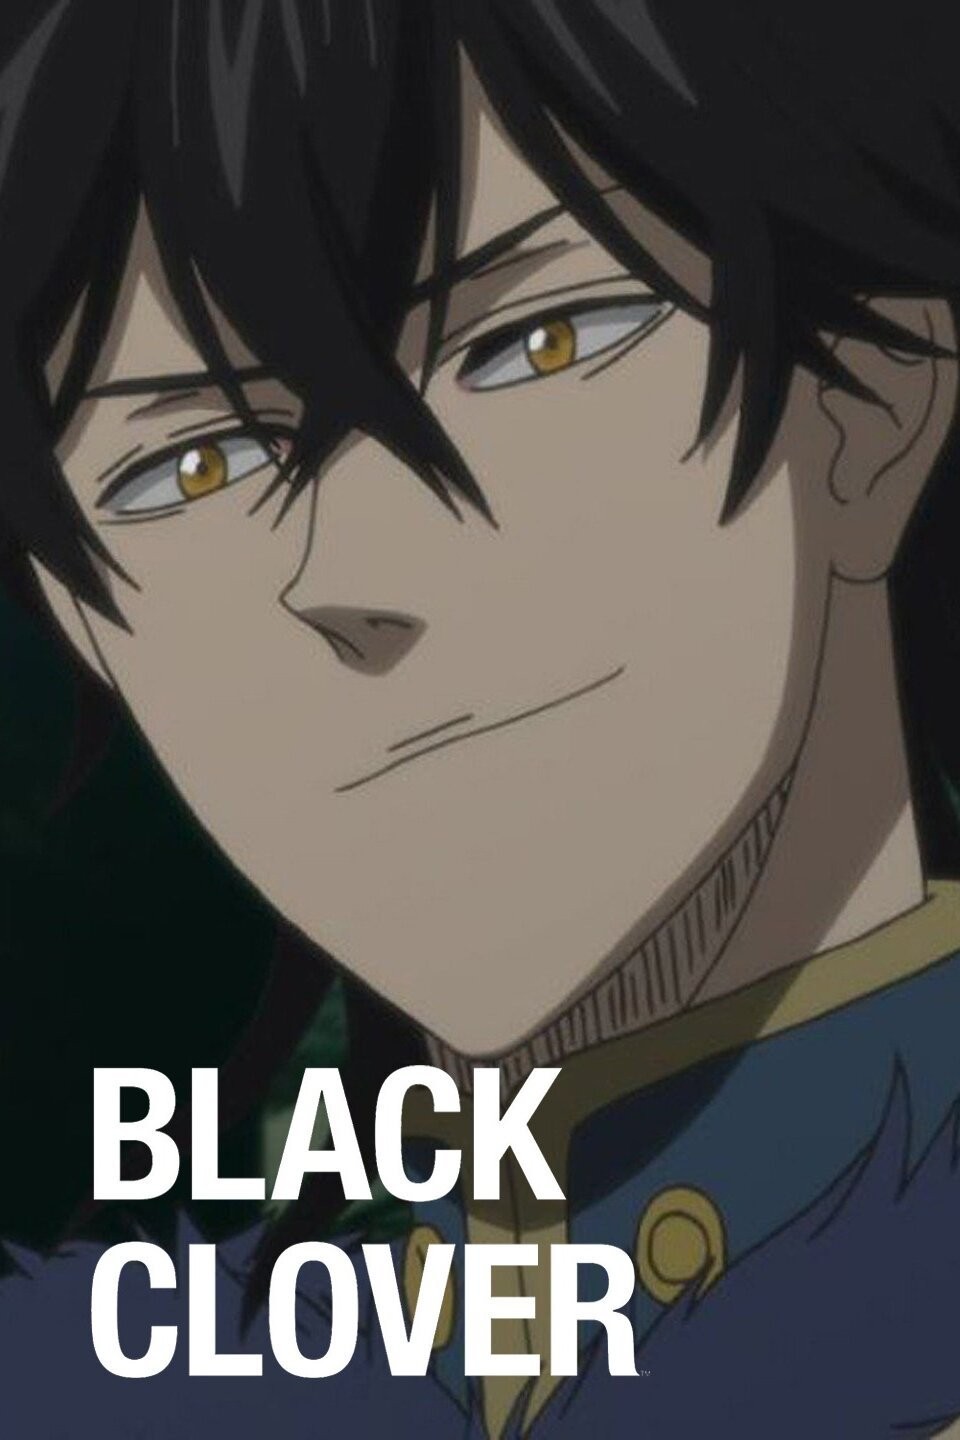 Watch Black Clover Season 1 Episode 1 - Asta and Yuno Online Now